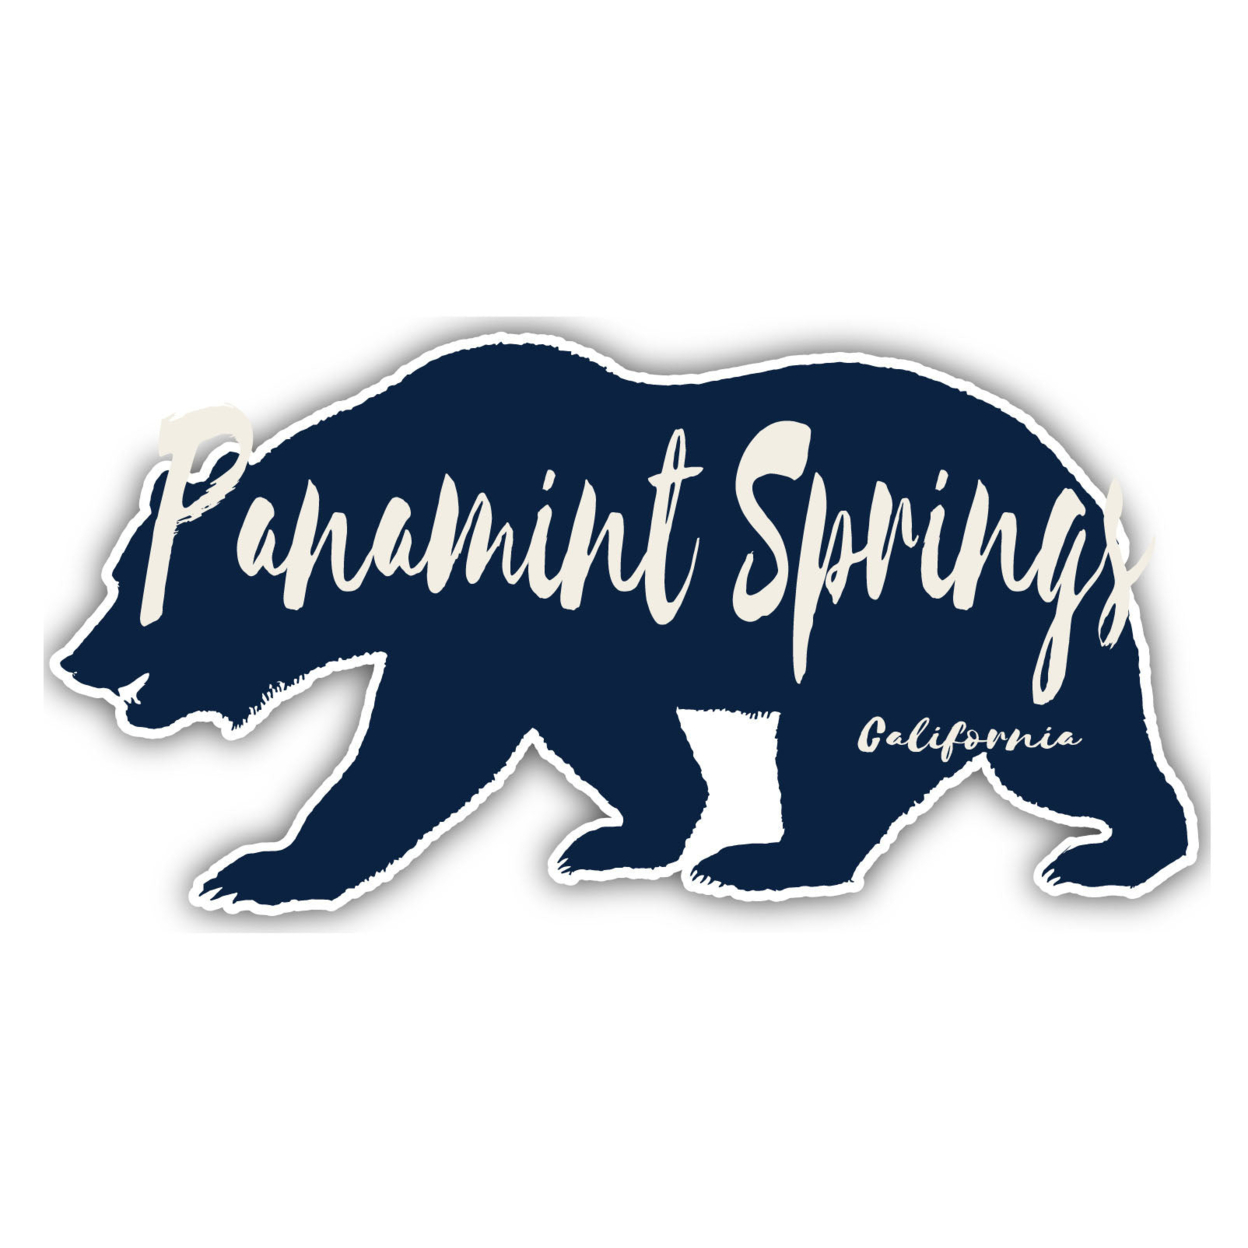 Panamint Springs California Souvenir Decorative Stickers (Choose Theme And Size) - Single Unit, 2-Inch, Bear